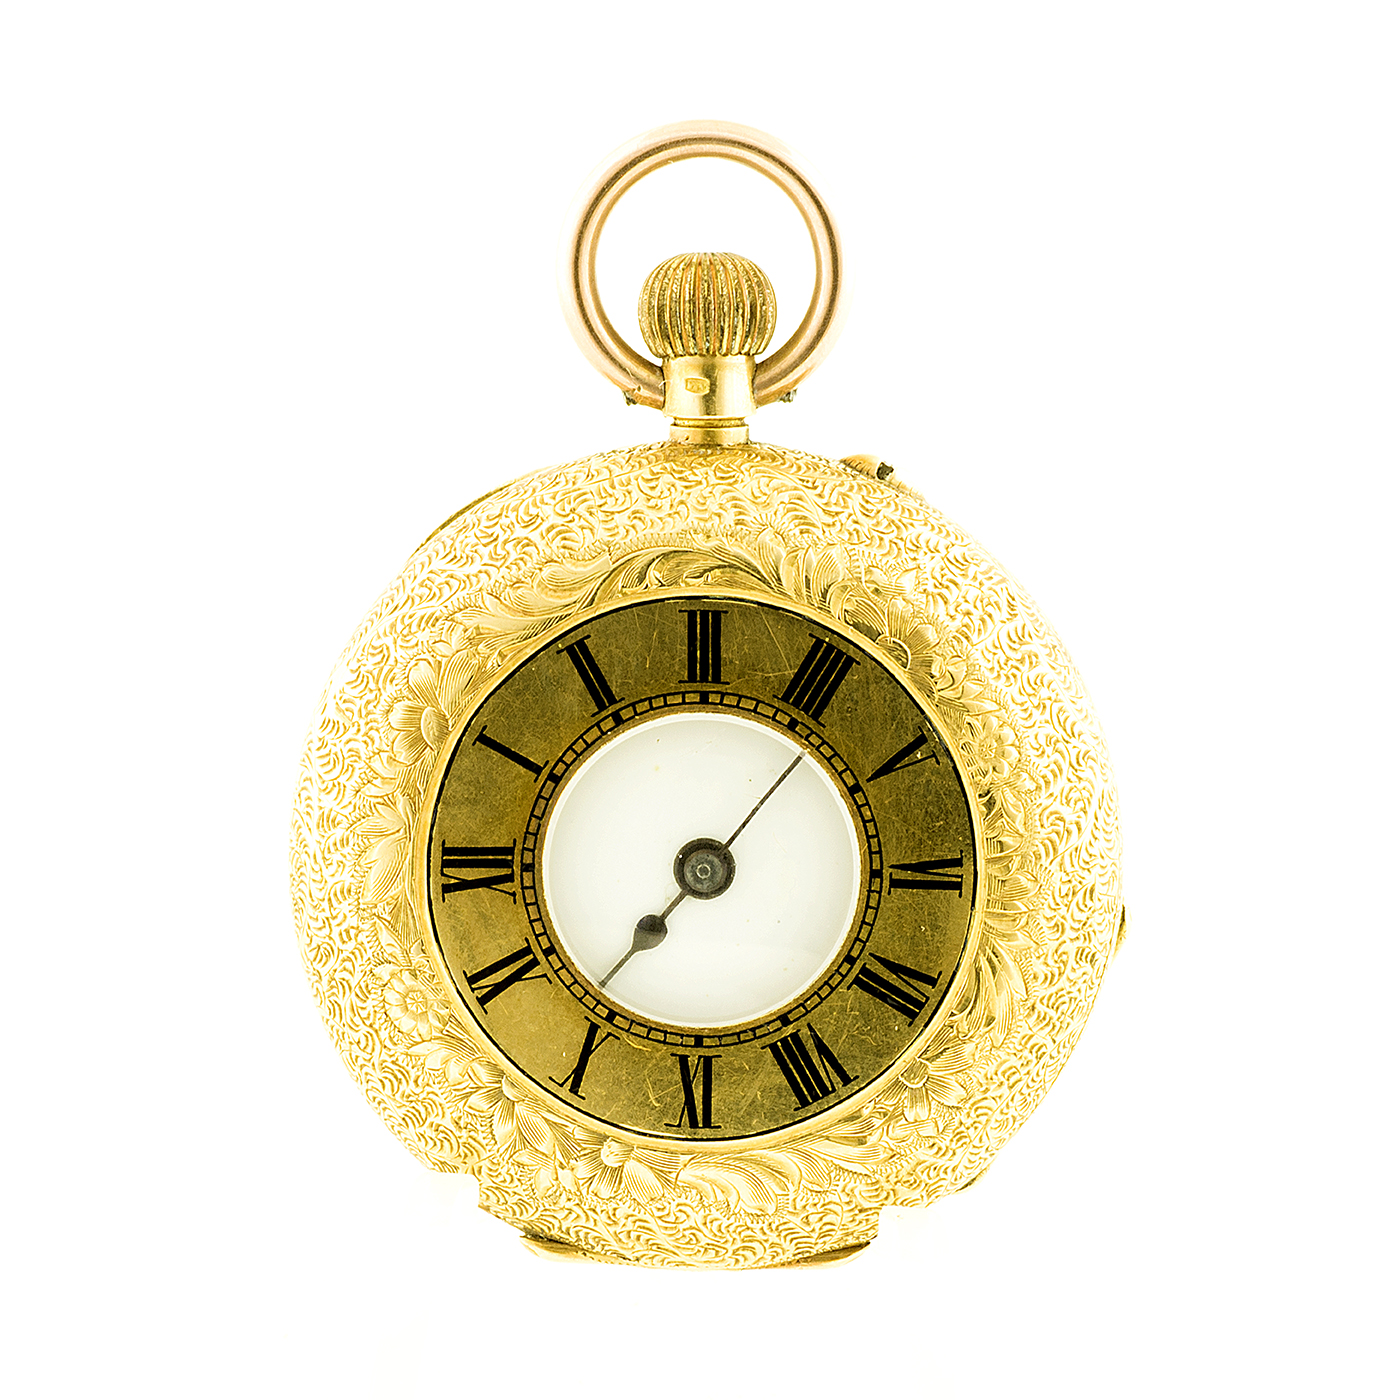 HW Pocket Watch-Hang, Half Saboneta and remontoir. 18k gold. Switzerland, ca. 1900